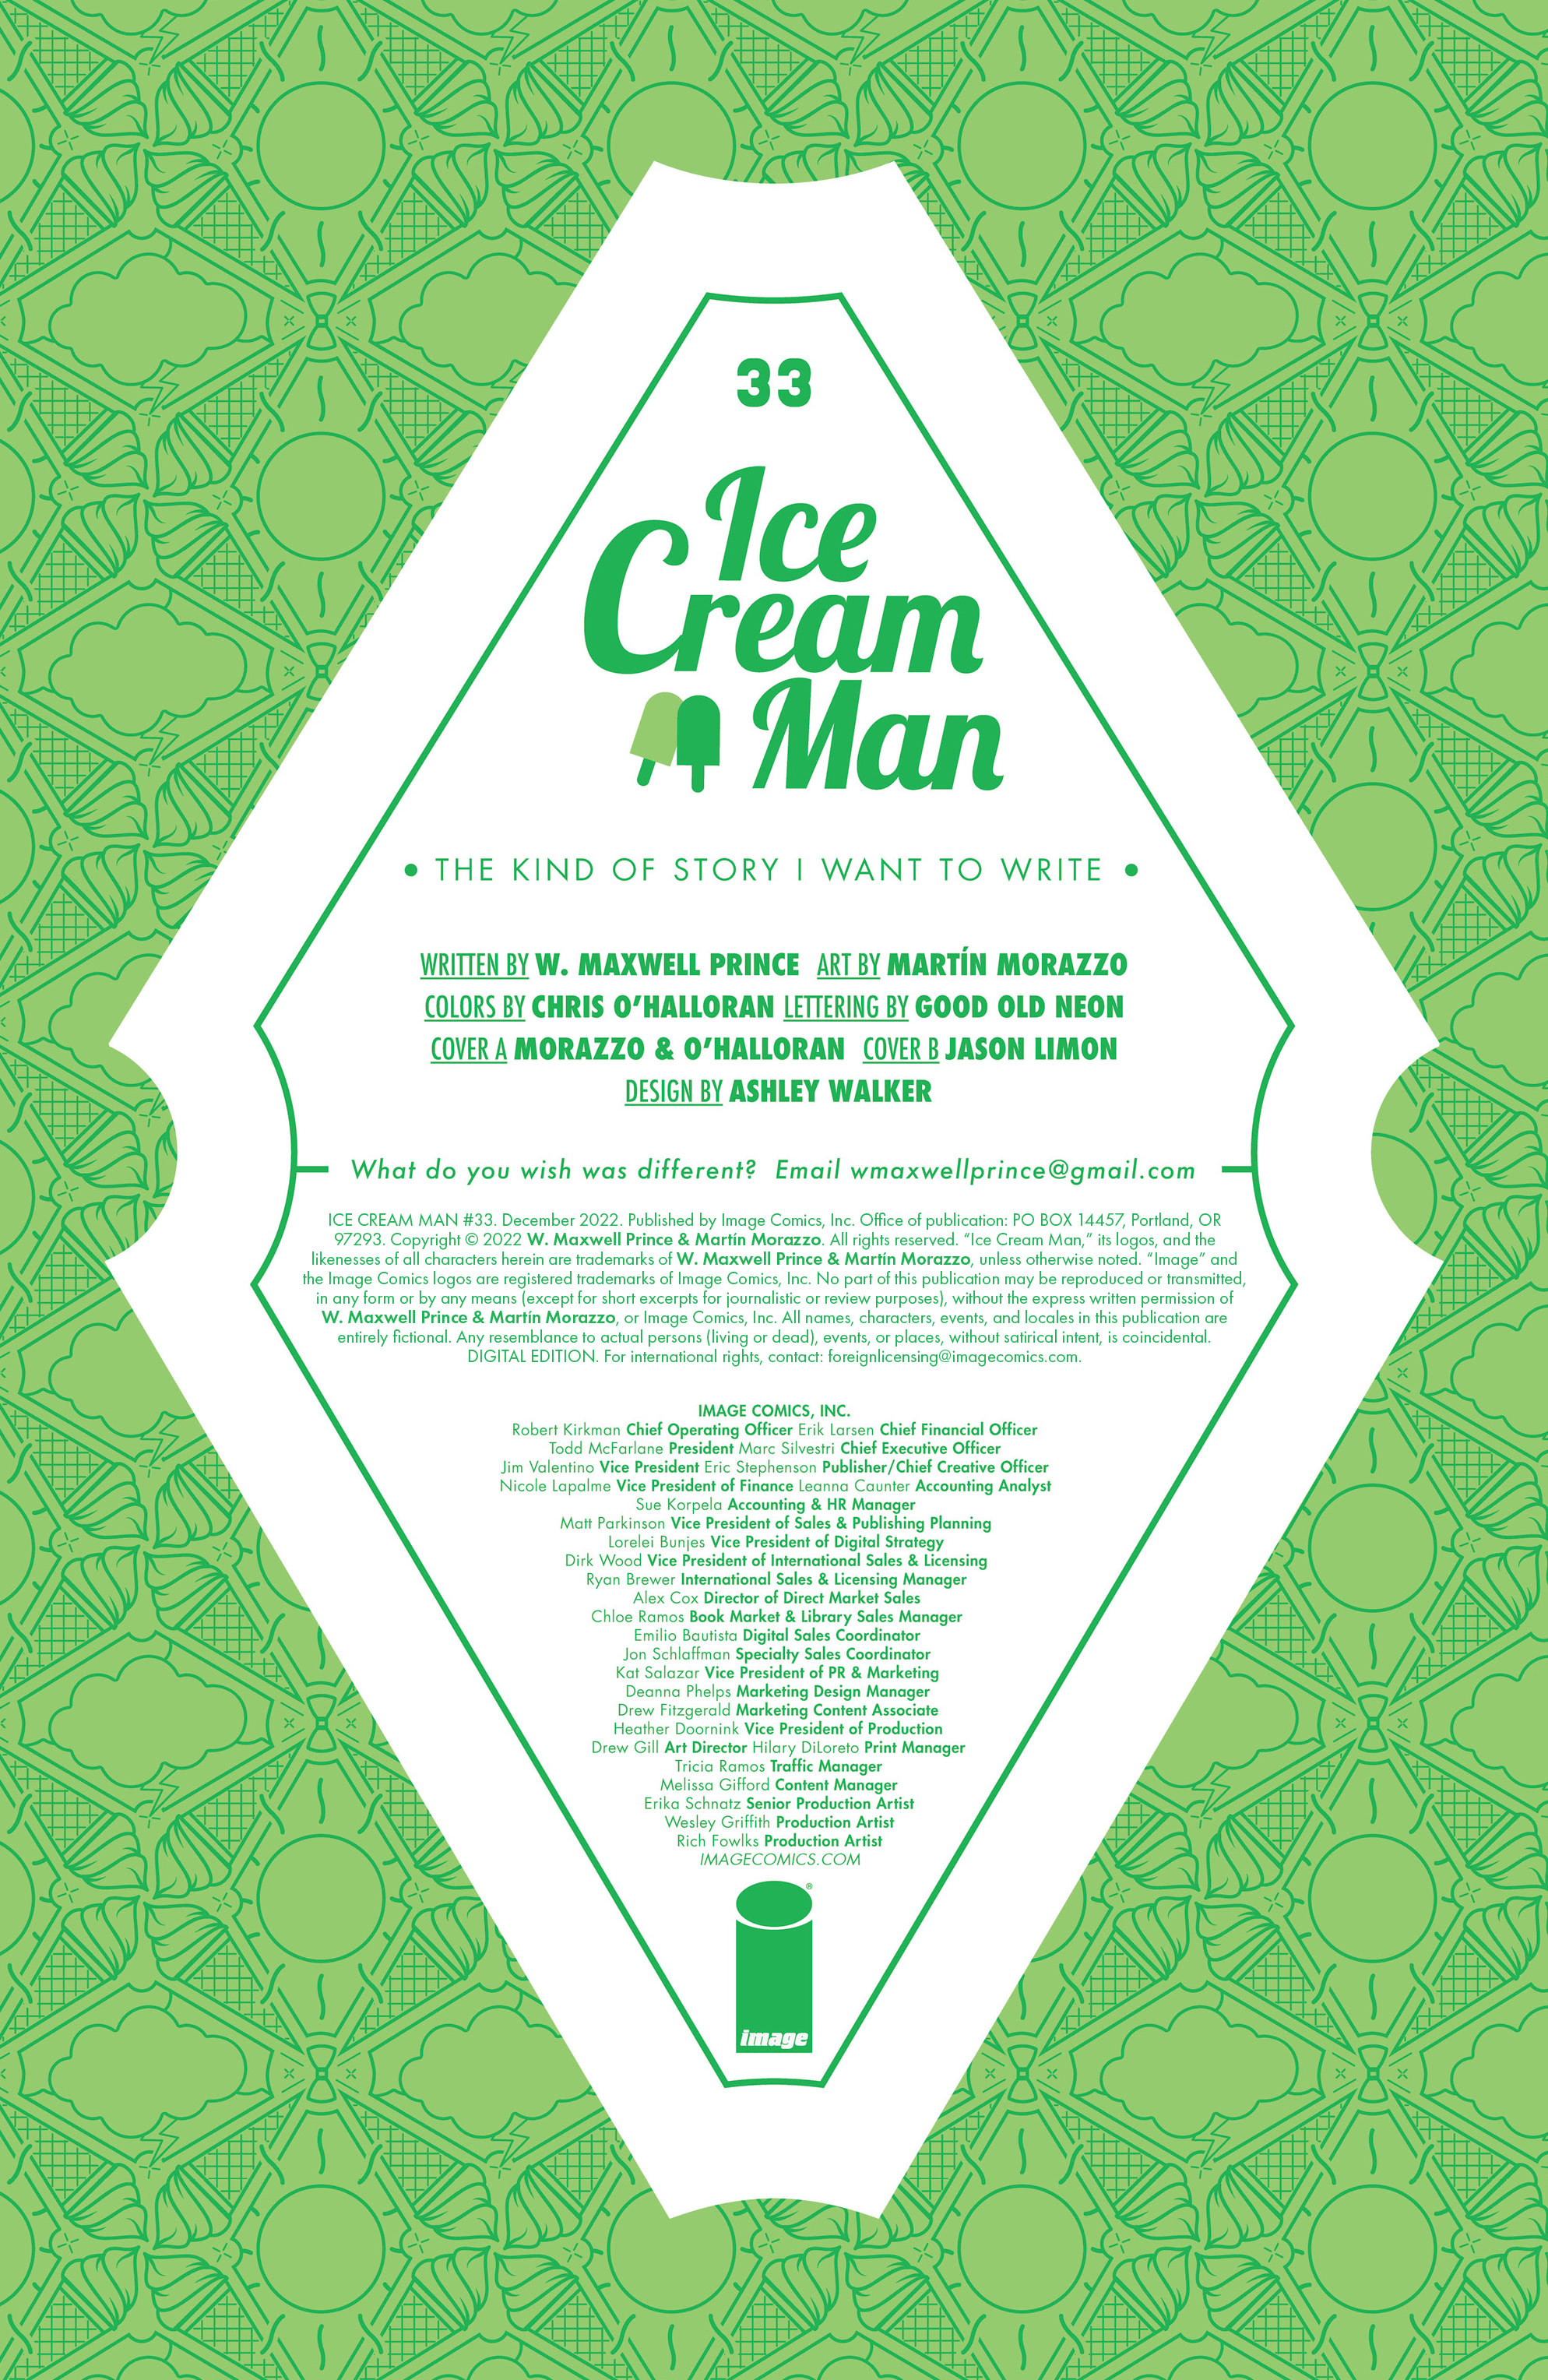 Read online Ice Cream Man comic -  Issue #33 - 2